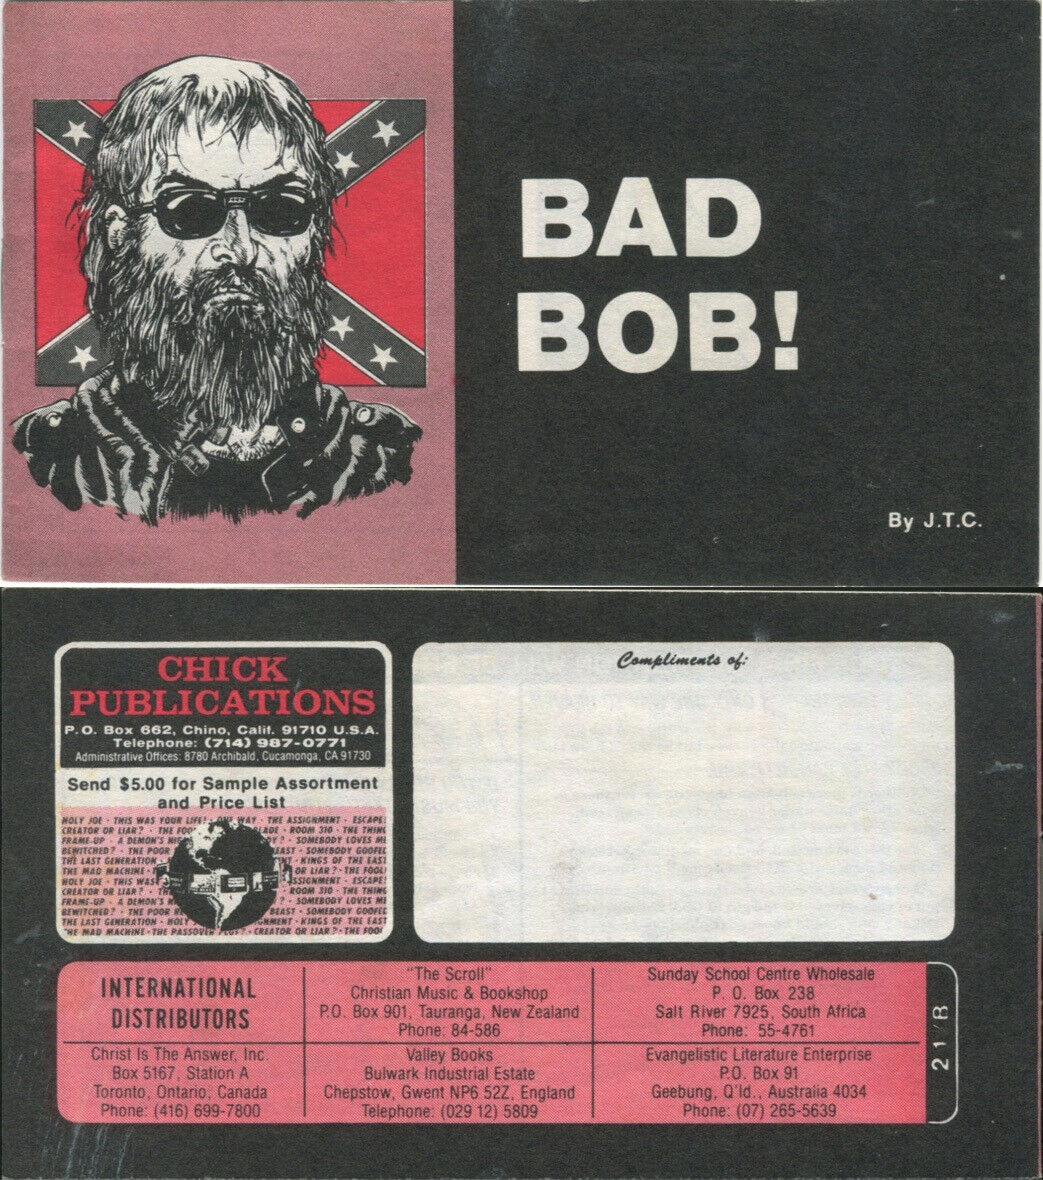 1983 Bad Bob Chick Publications Vintage Tract - Jack